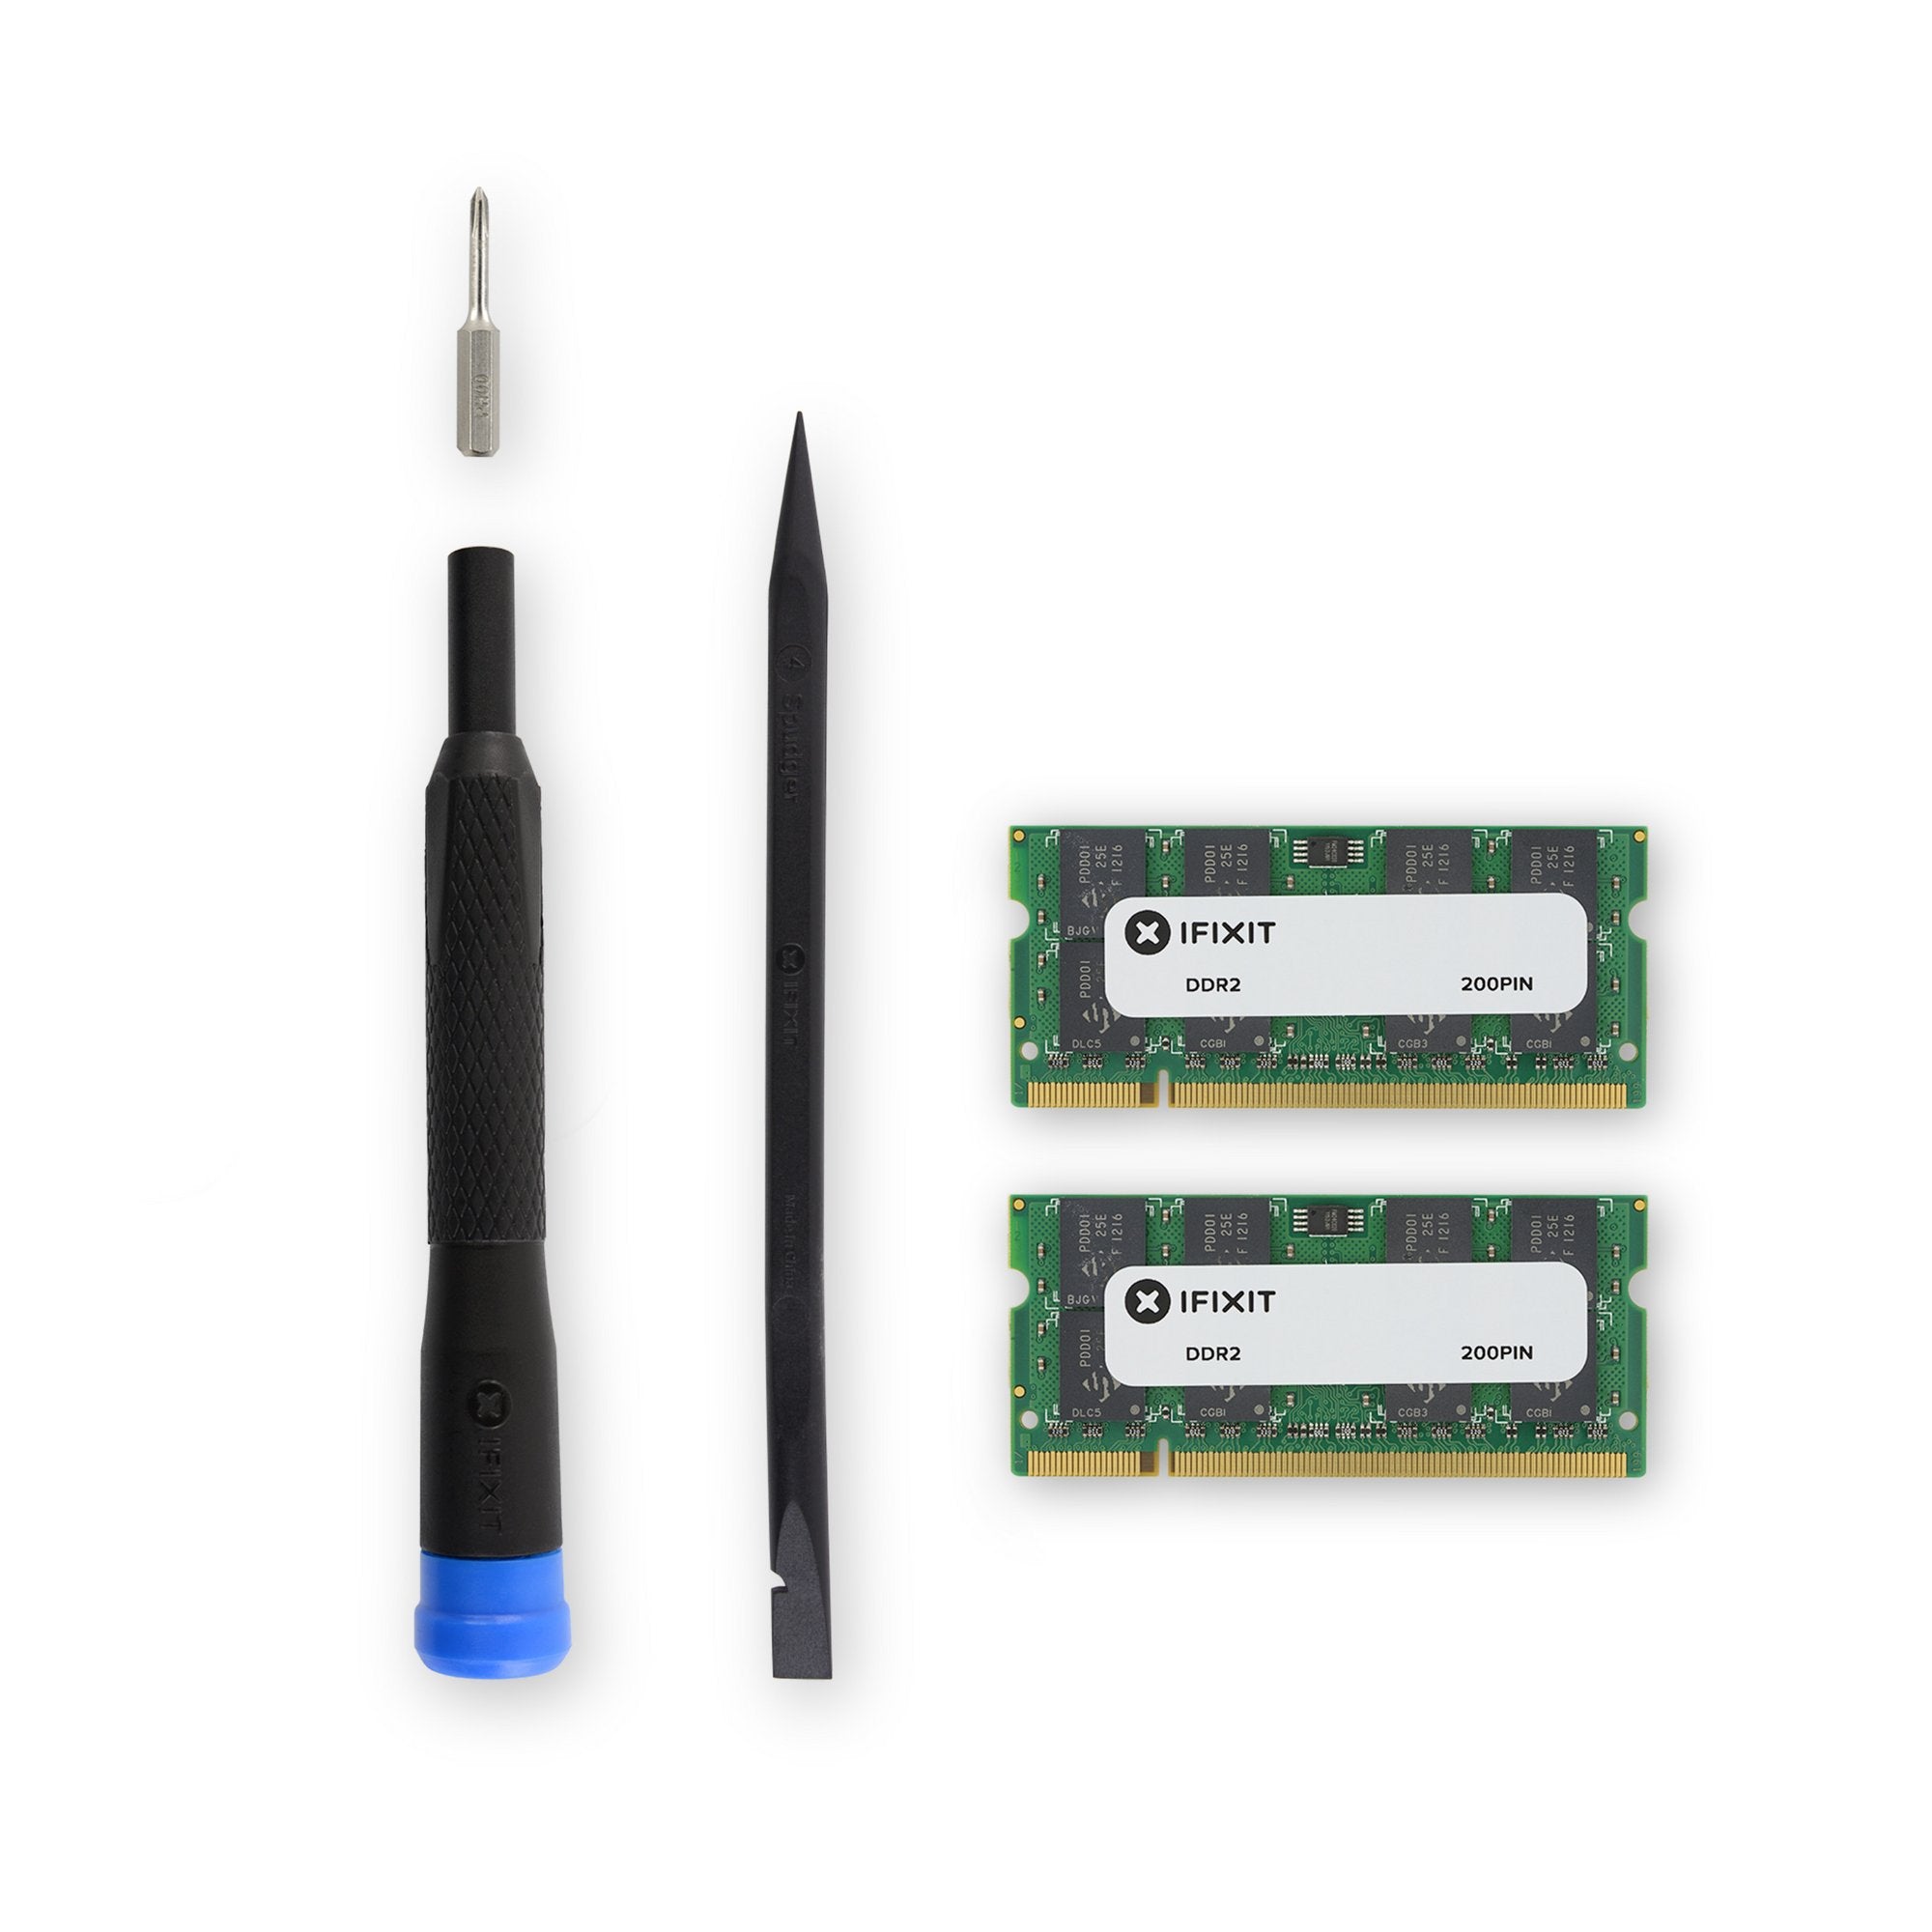 MacBook Pro 17" Model A1229 Memory Maxxer RAM Upgrade Kit